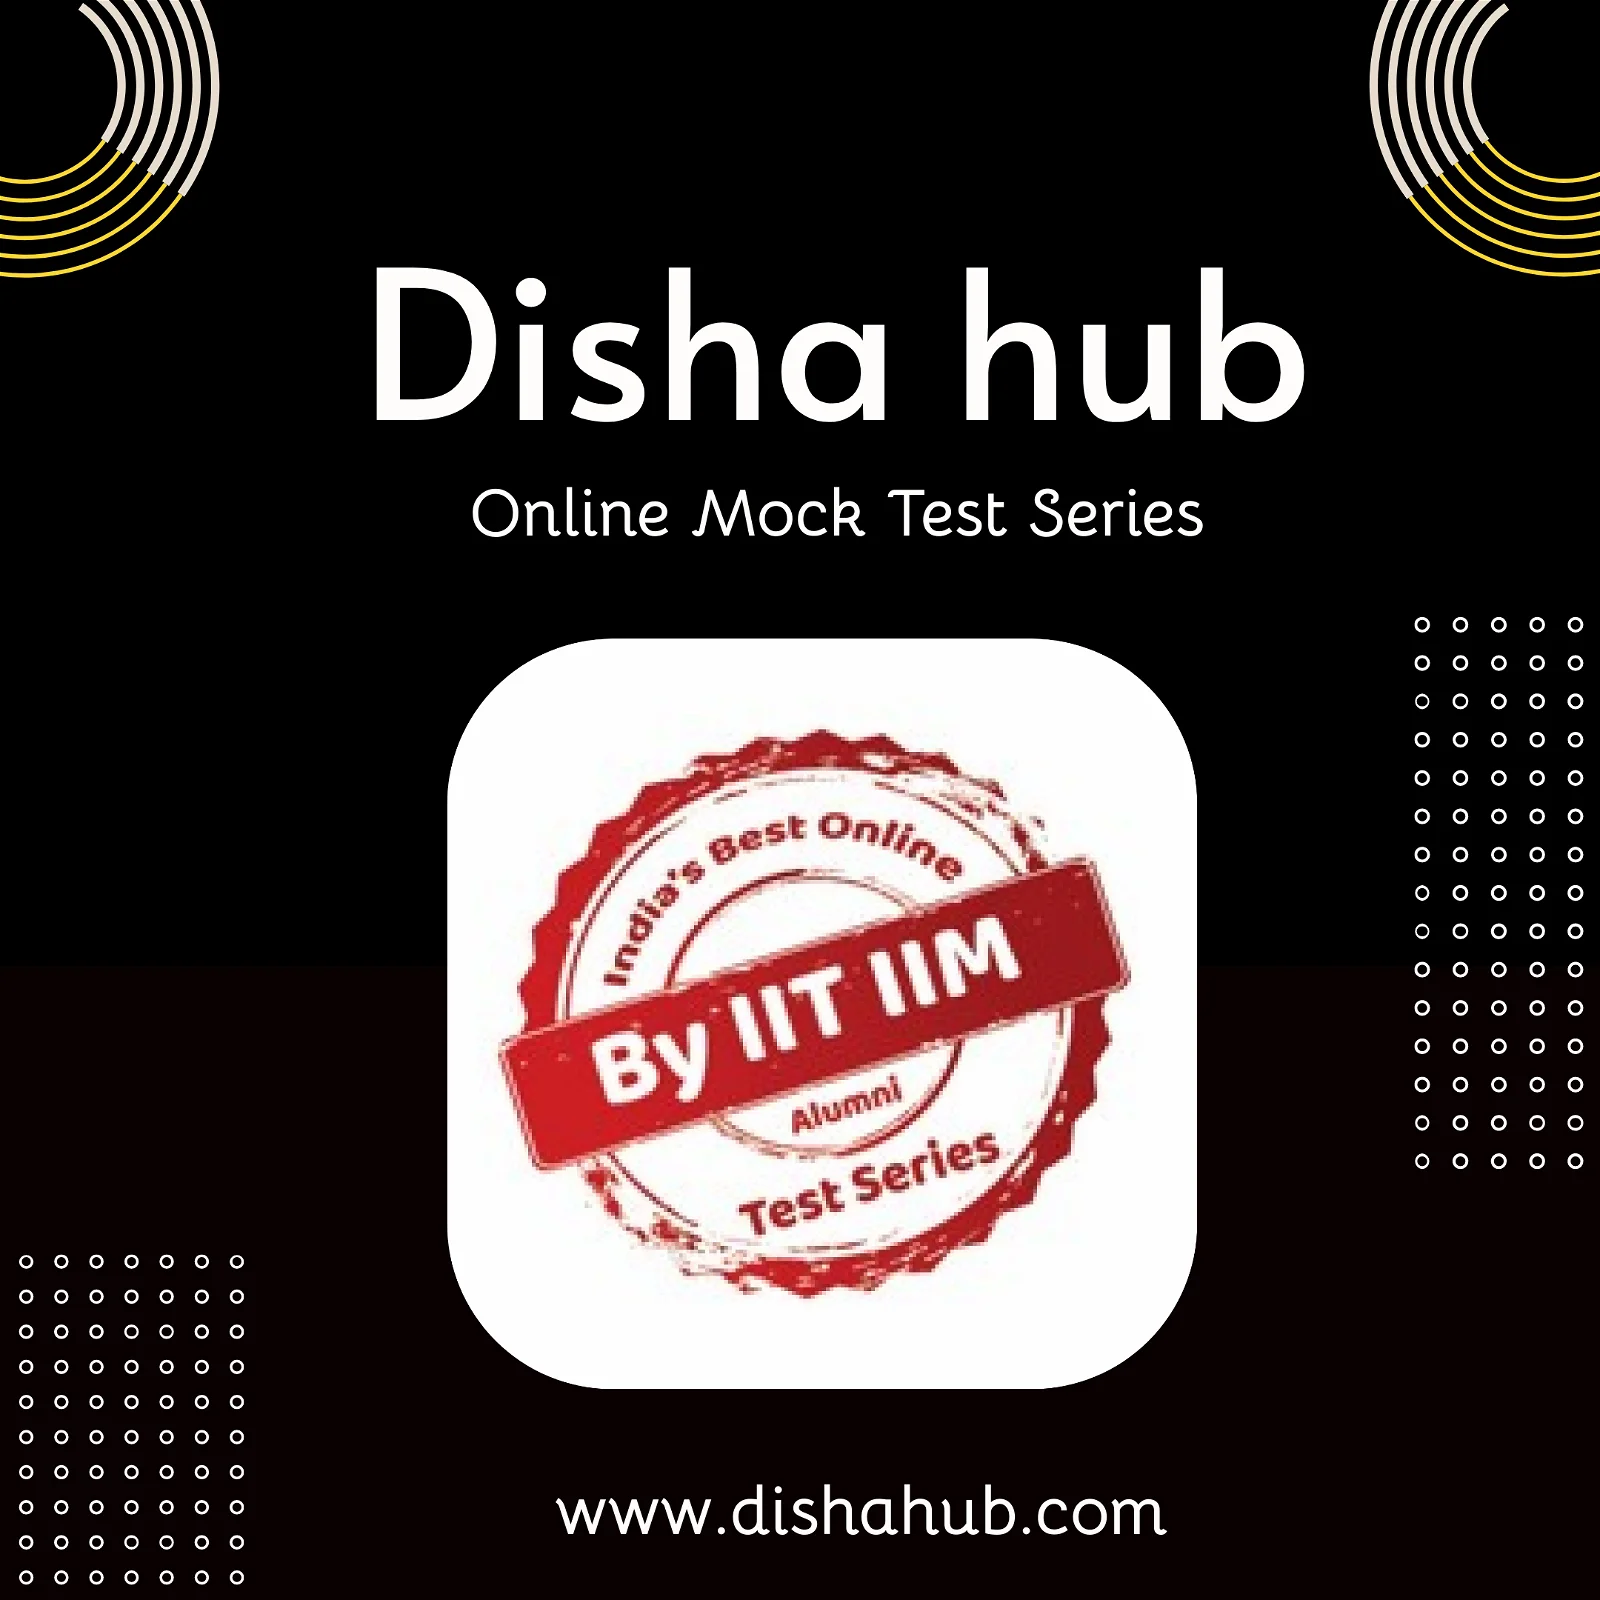 G-1 Communications - Disha Hub single feature